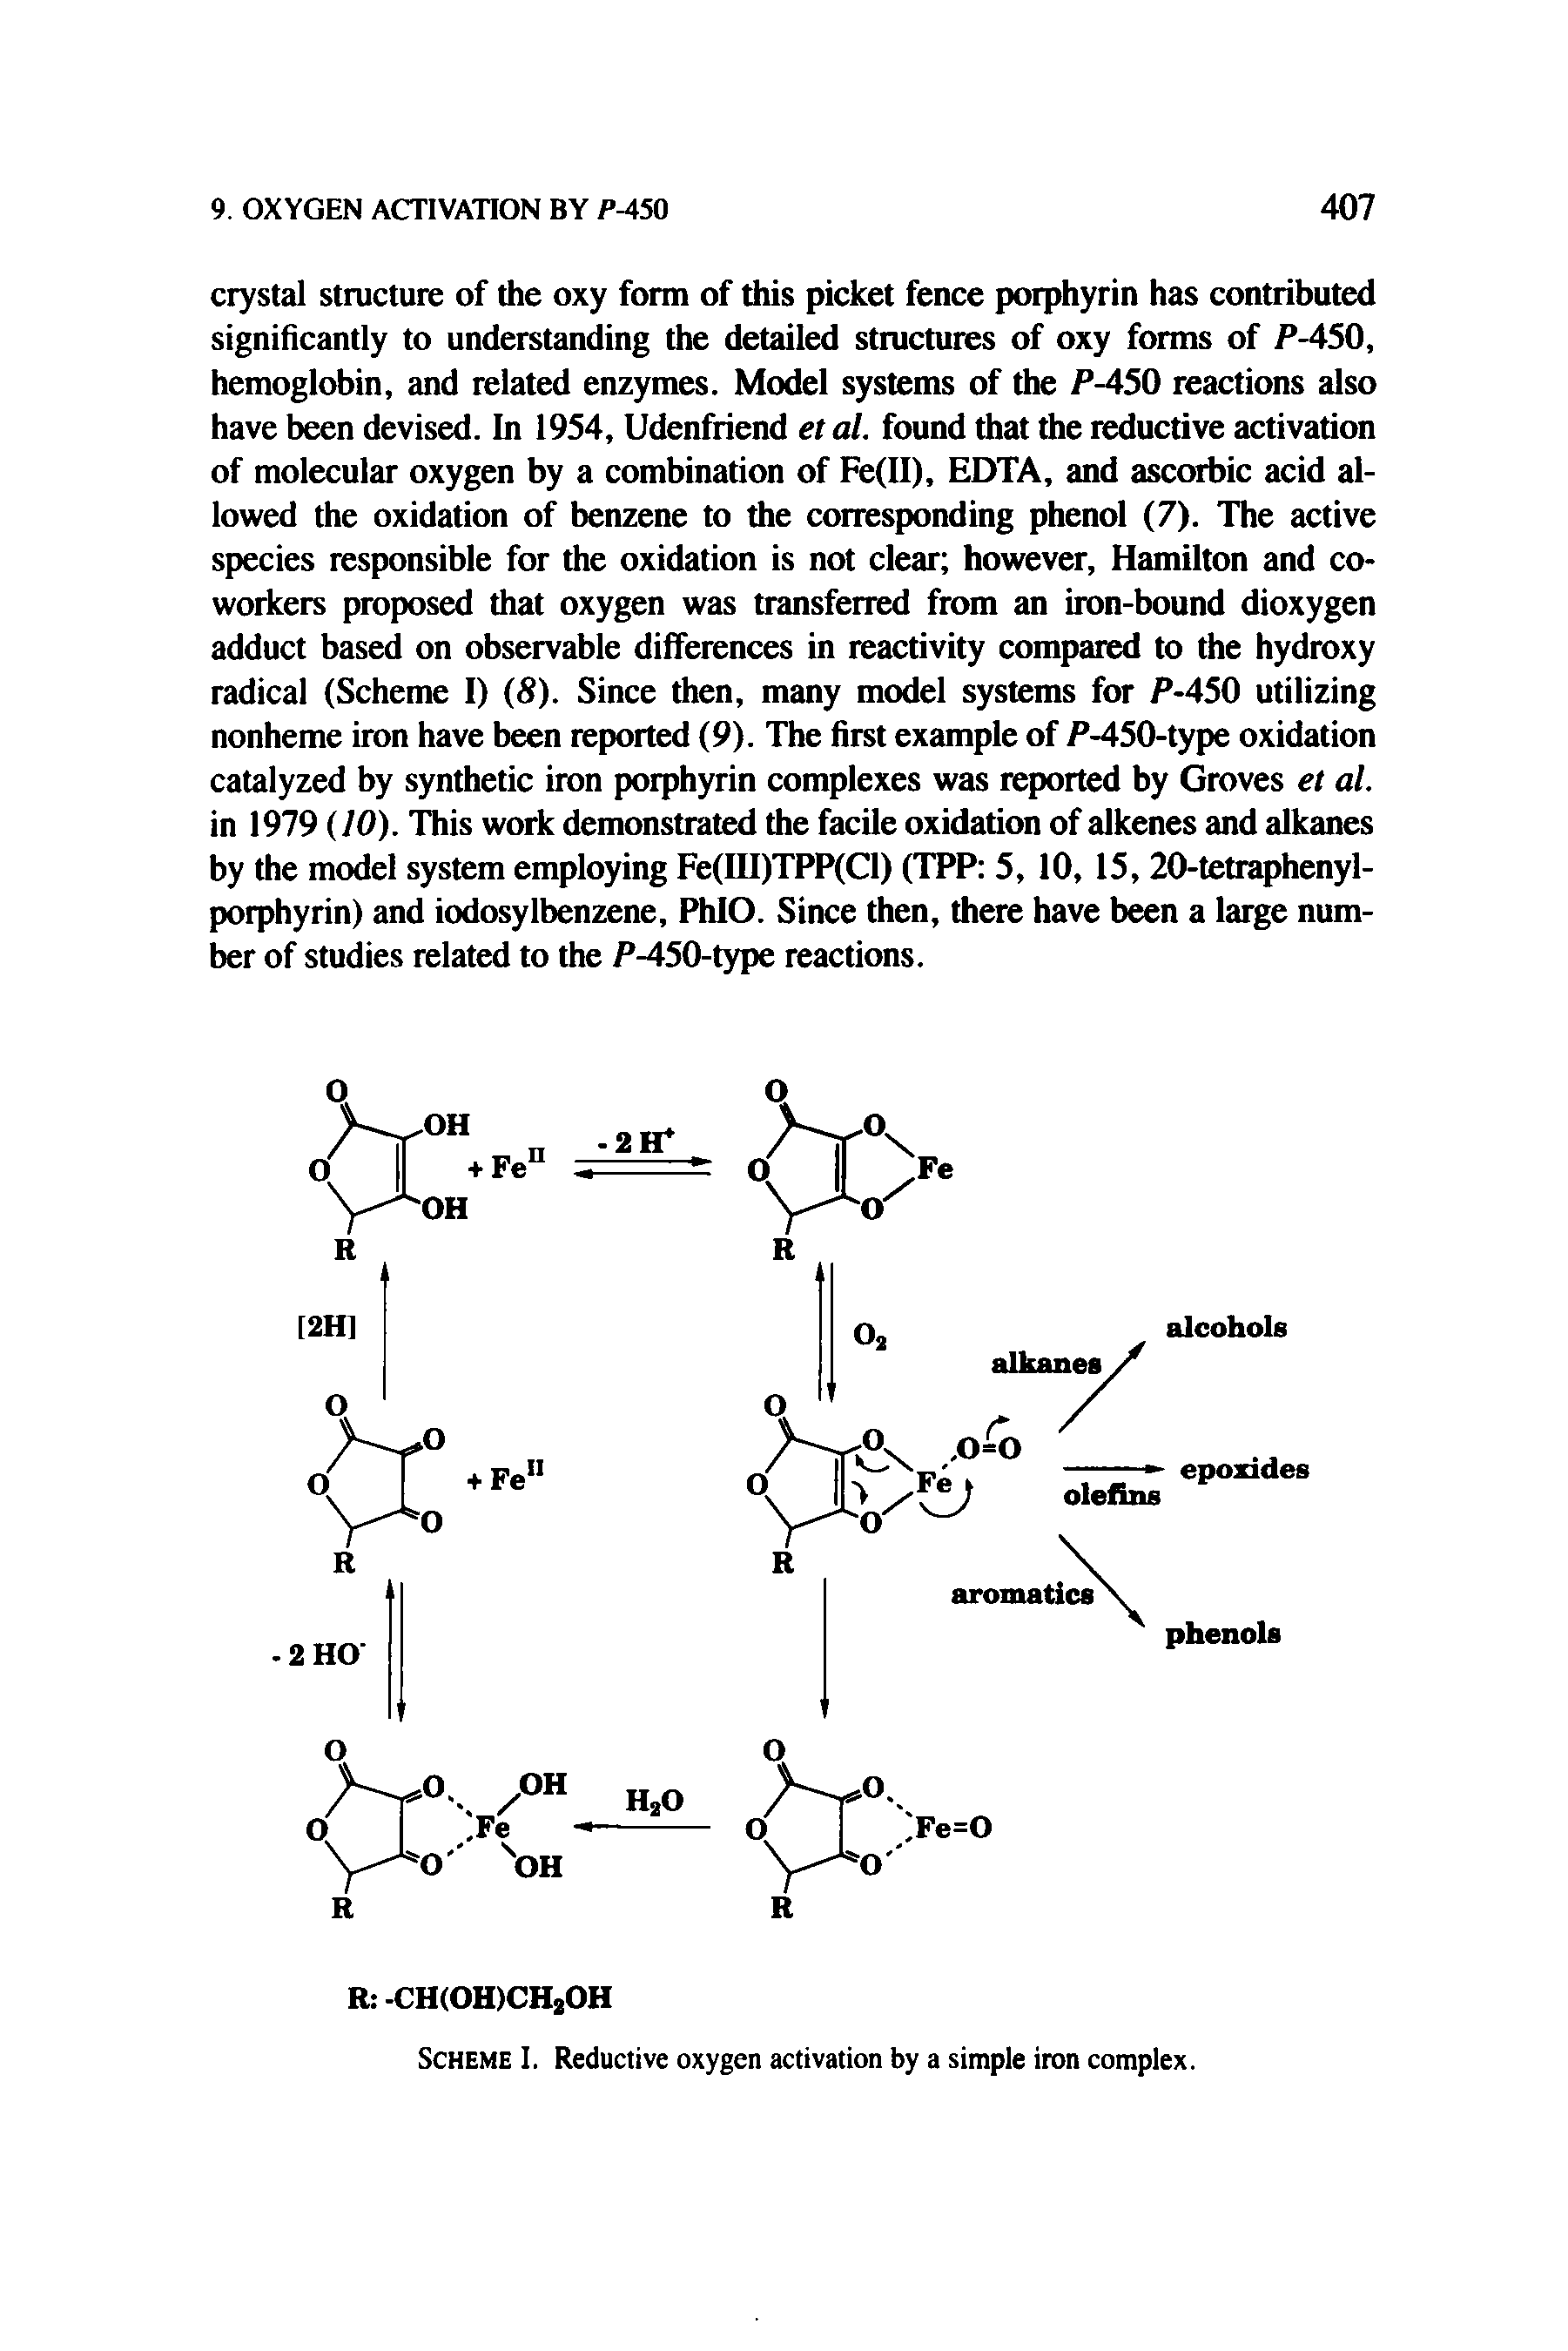 Scheme I. Reductive oxygen activation by a simple iron complex.